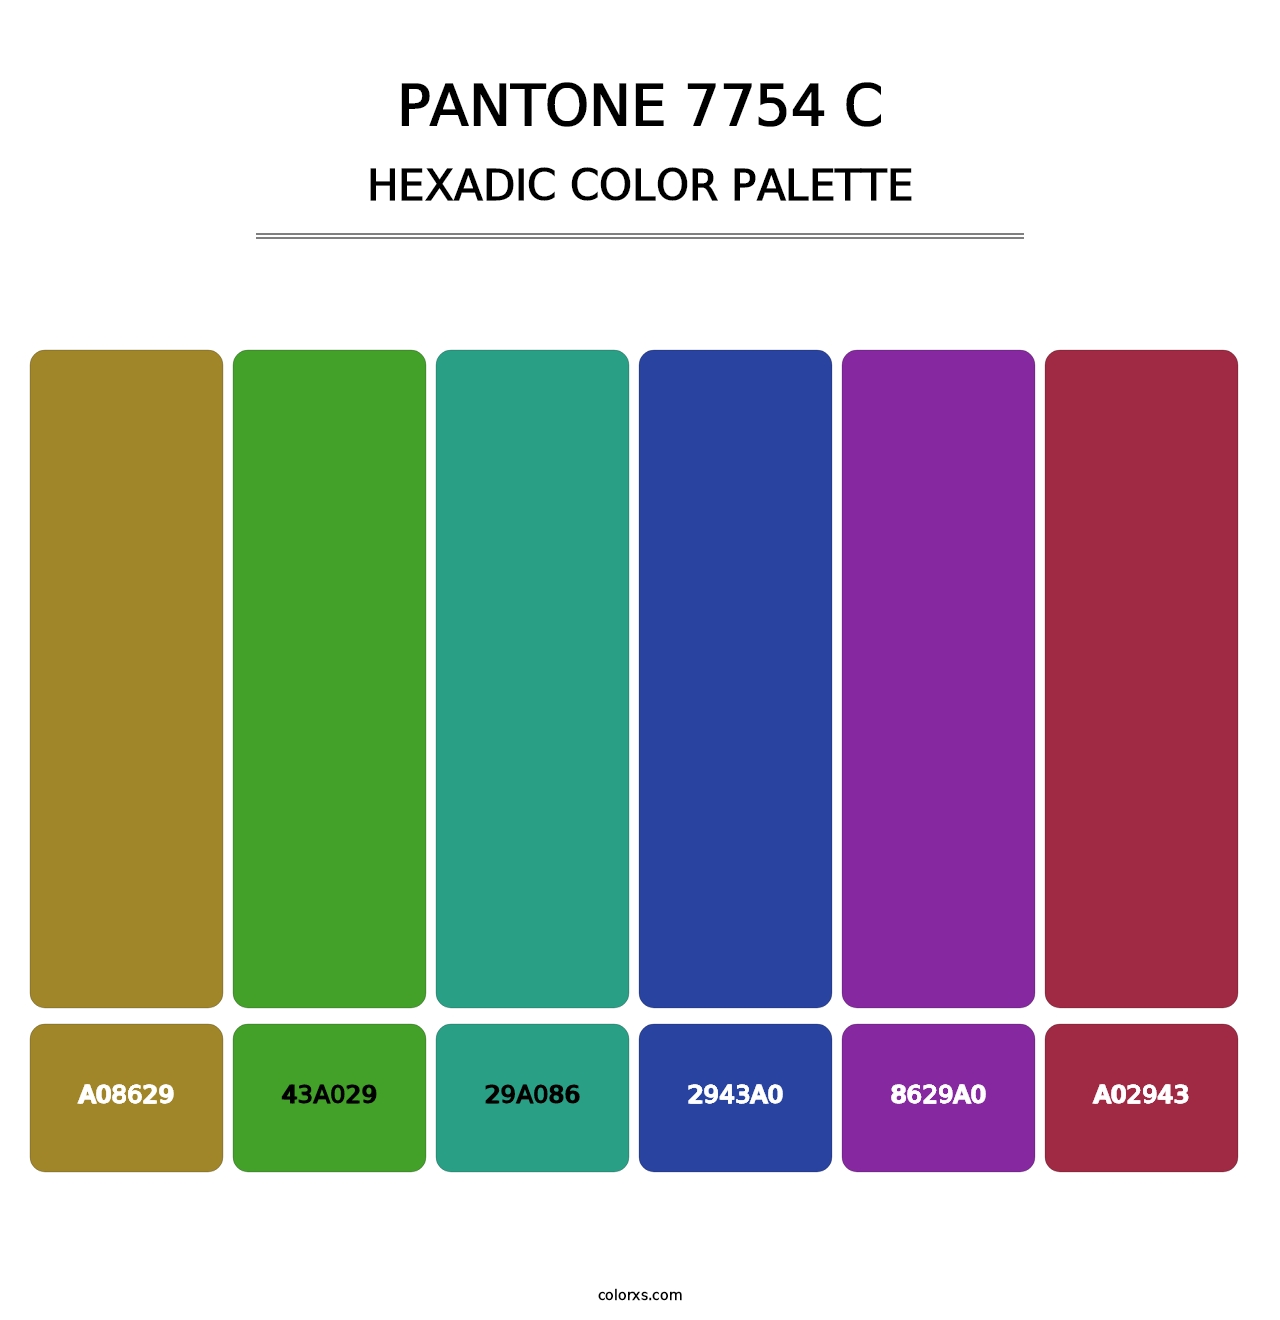 PANTONE 7754 C - Hexadic Color Palette